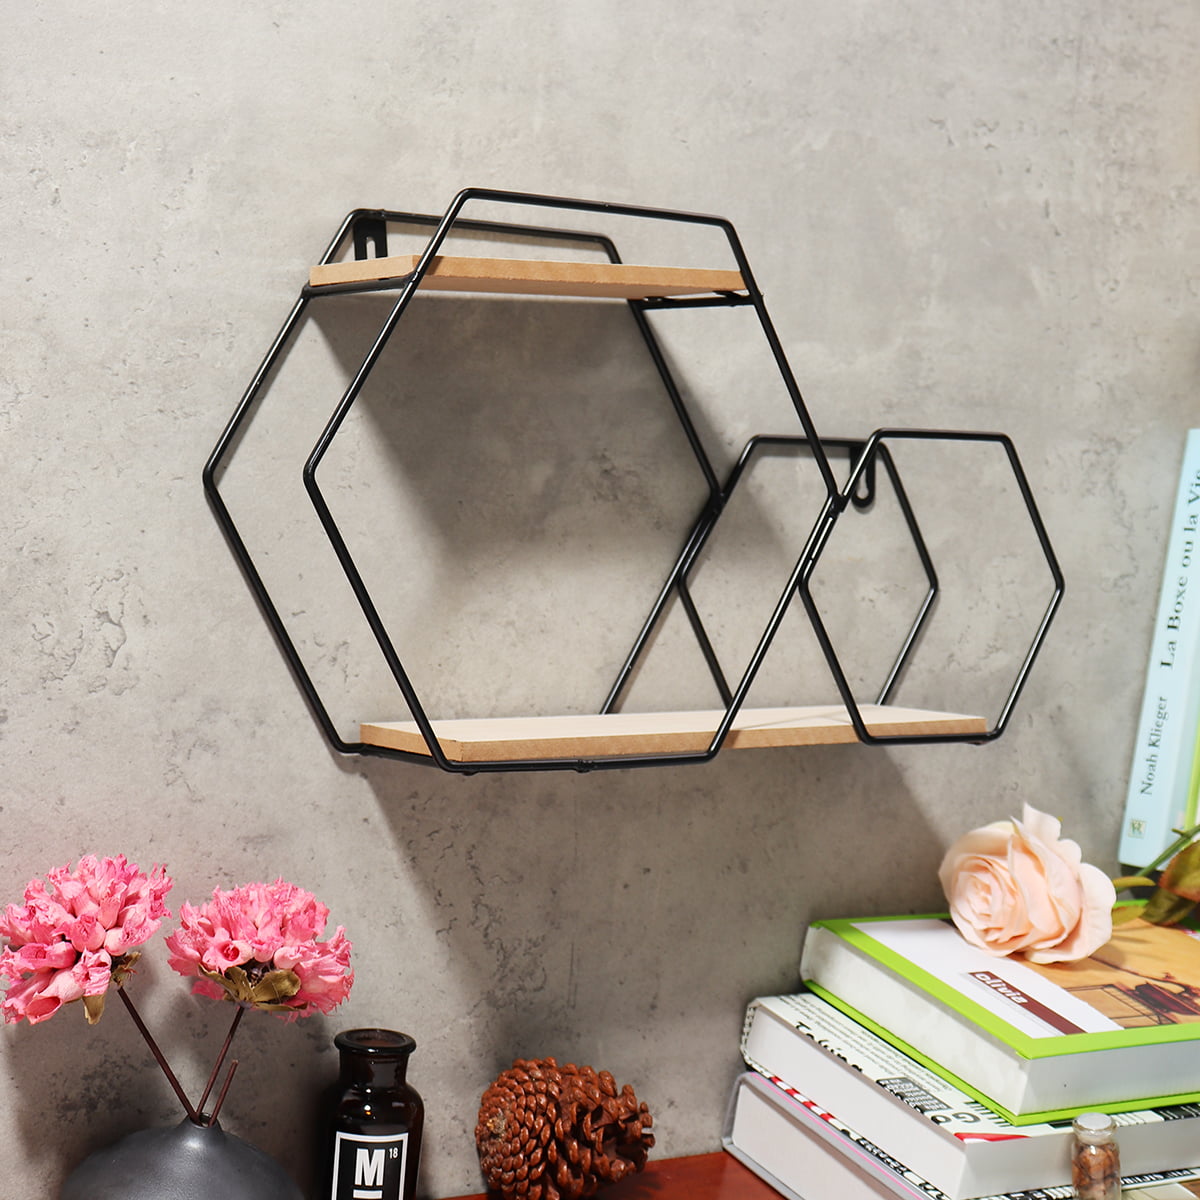 Details about   Hexagon Metal Wire Wood Wall Shelf Modern Loft Dorm Double-Layer Storage Shelf 